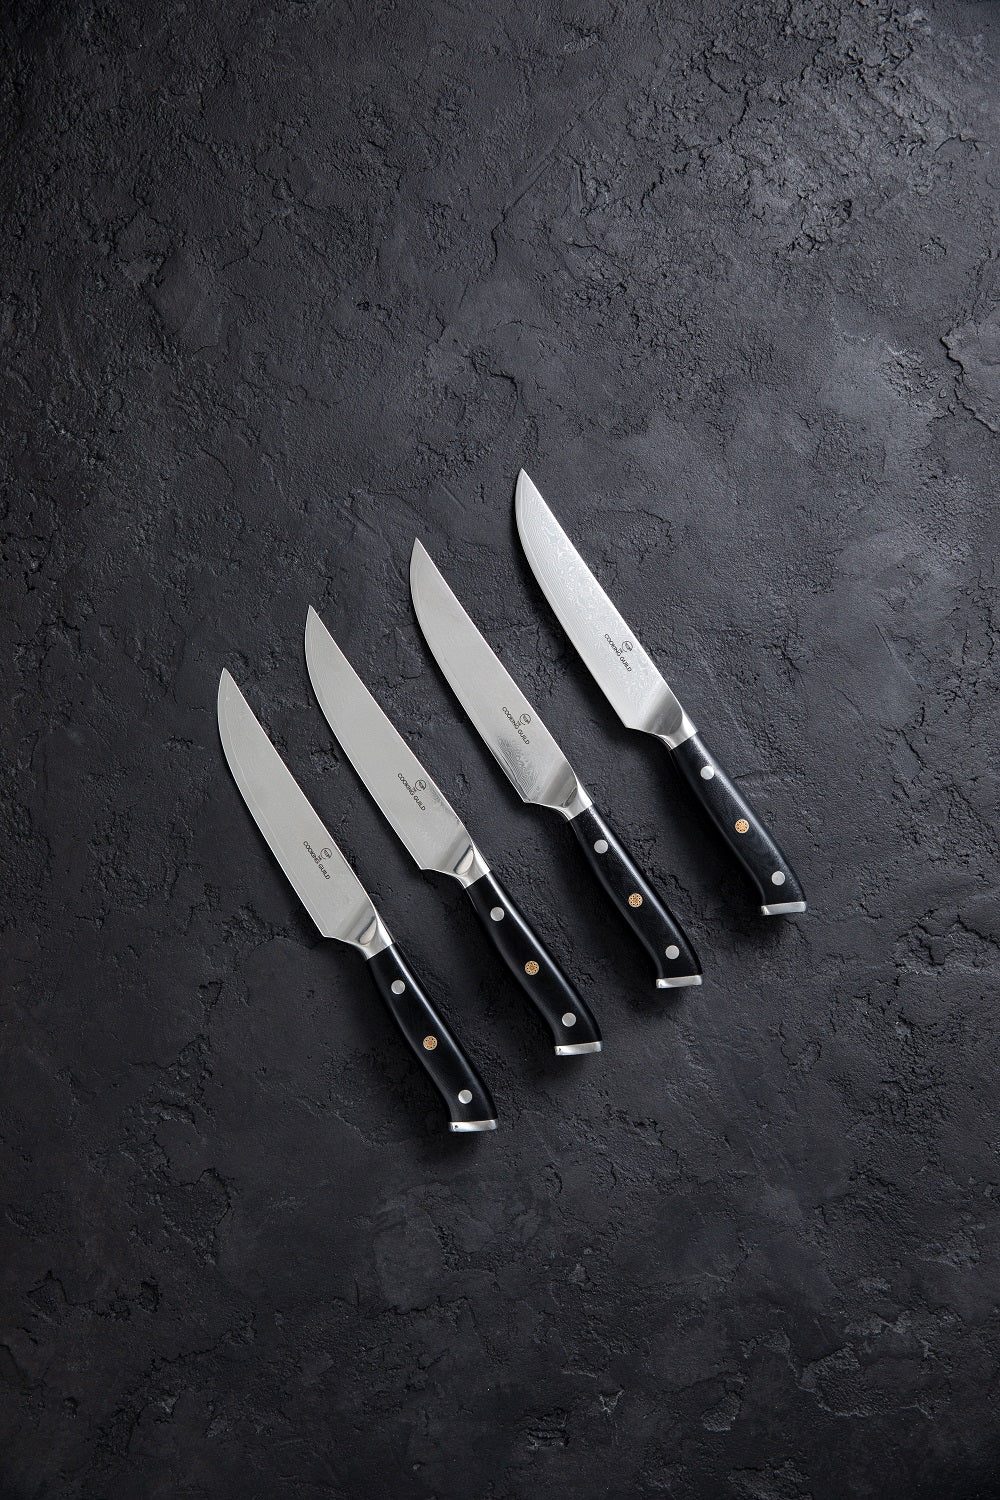 Plain Edge Steak Knives vs Serrated Steak Knives: What Makes a Plain Edge Steak Knife the Better Option